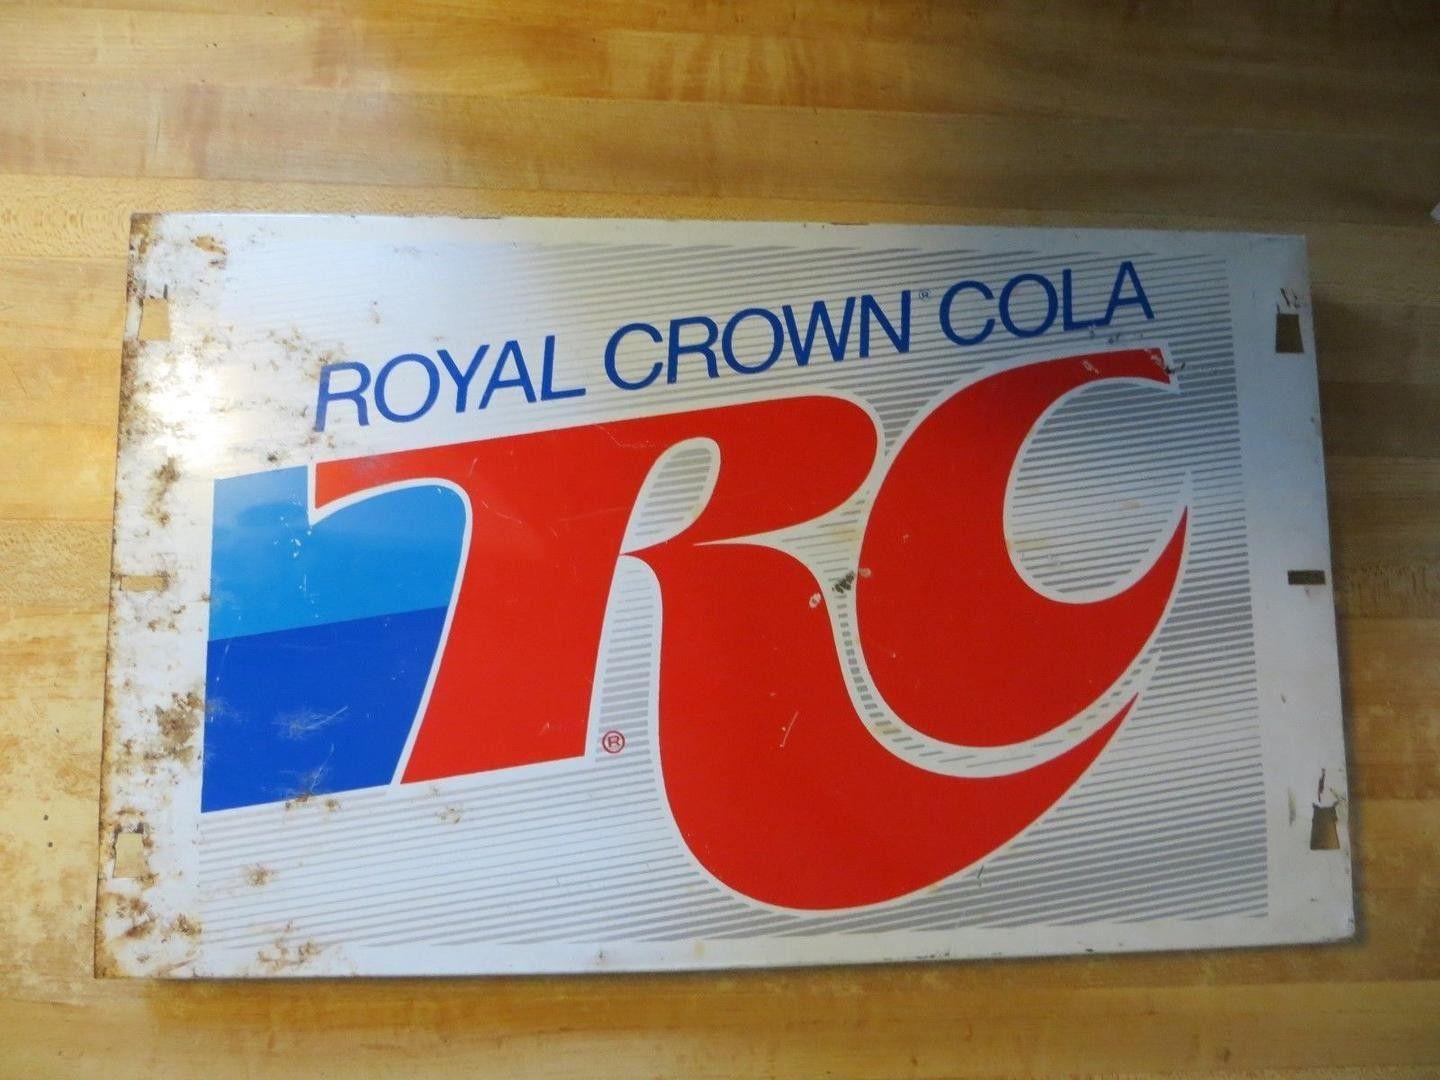 Royal Crown Cola Logo - RC Royal Crown Cola soda pop store display advertising logo steel